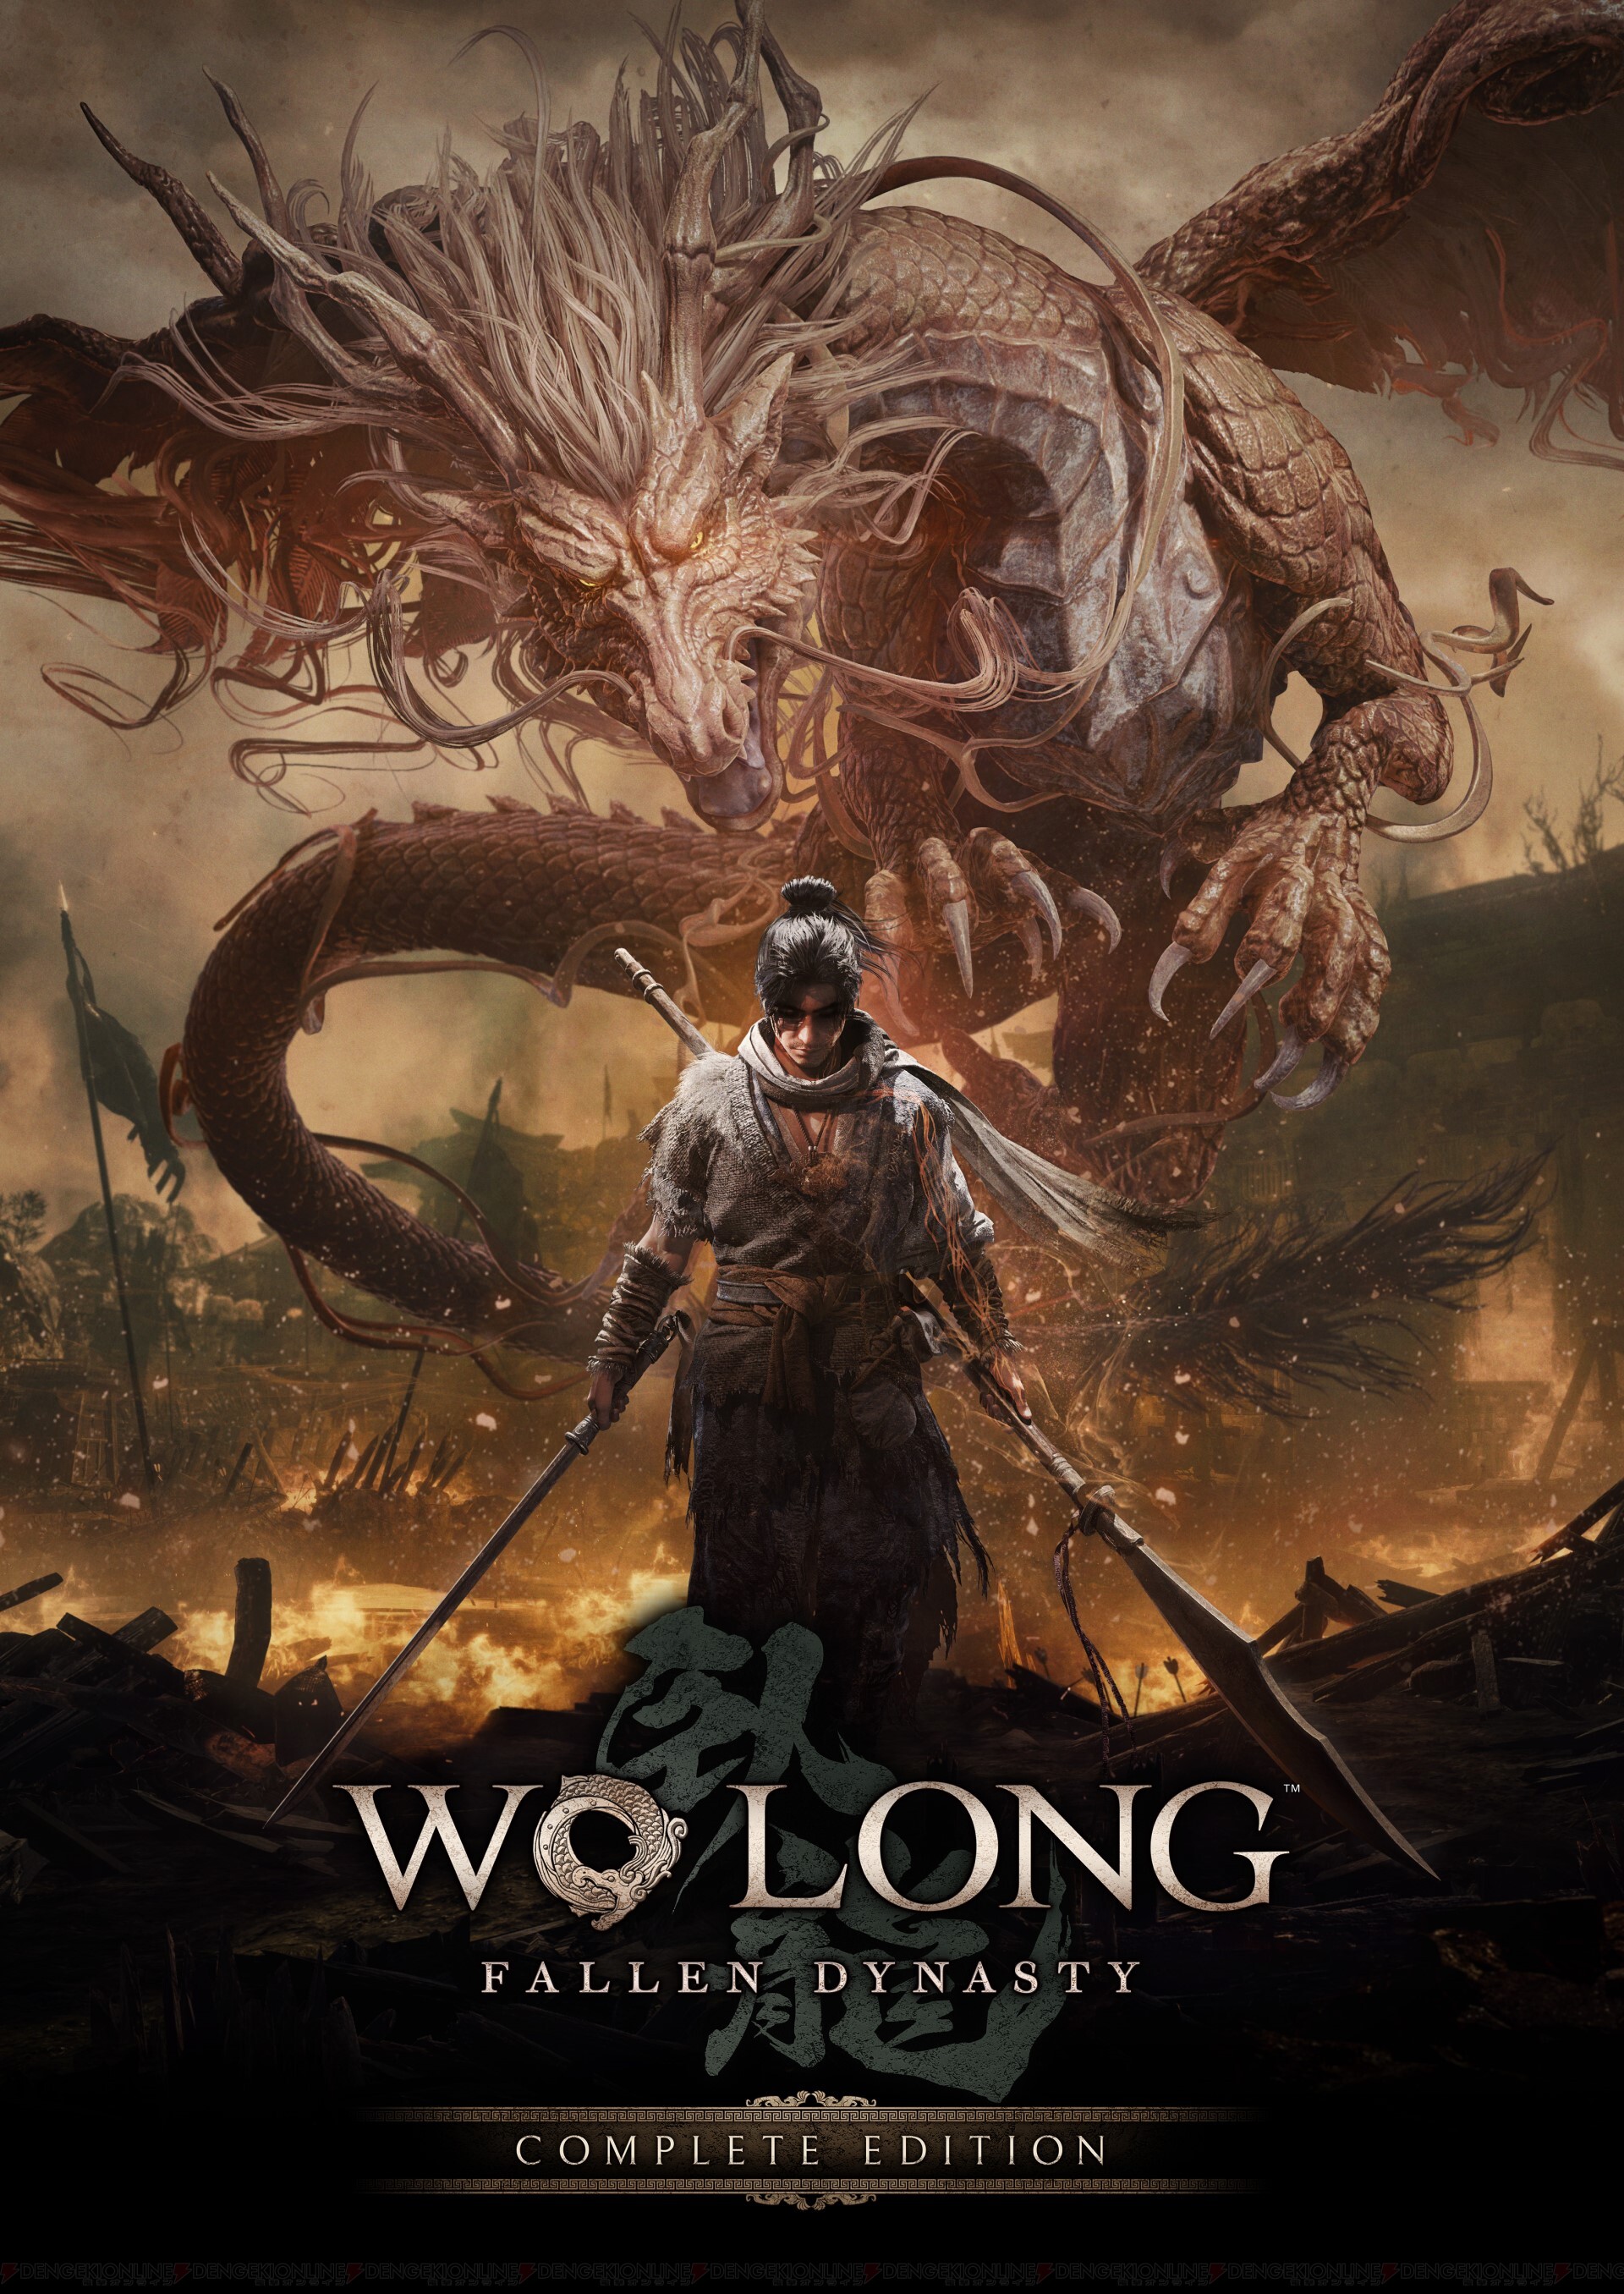 Wo Long: Fallen Dynasty』ゲーム本編と追加DLCなどをセットにした